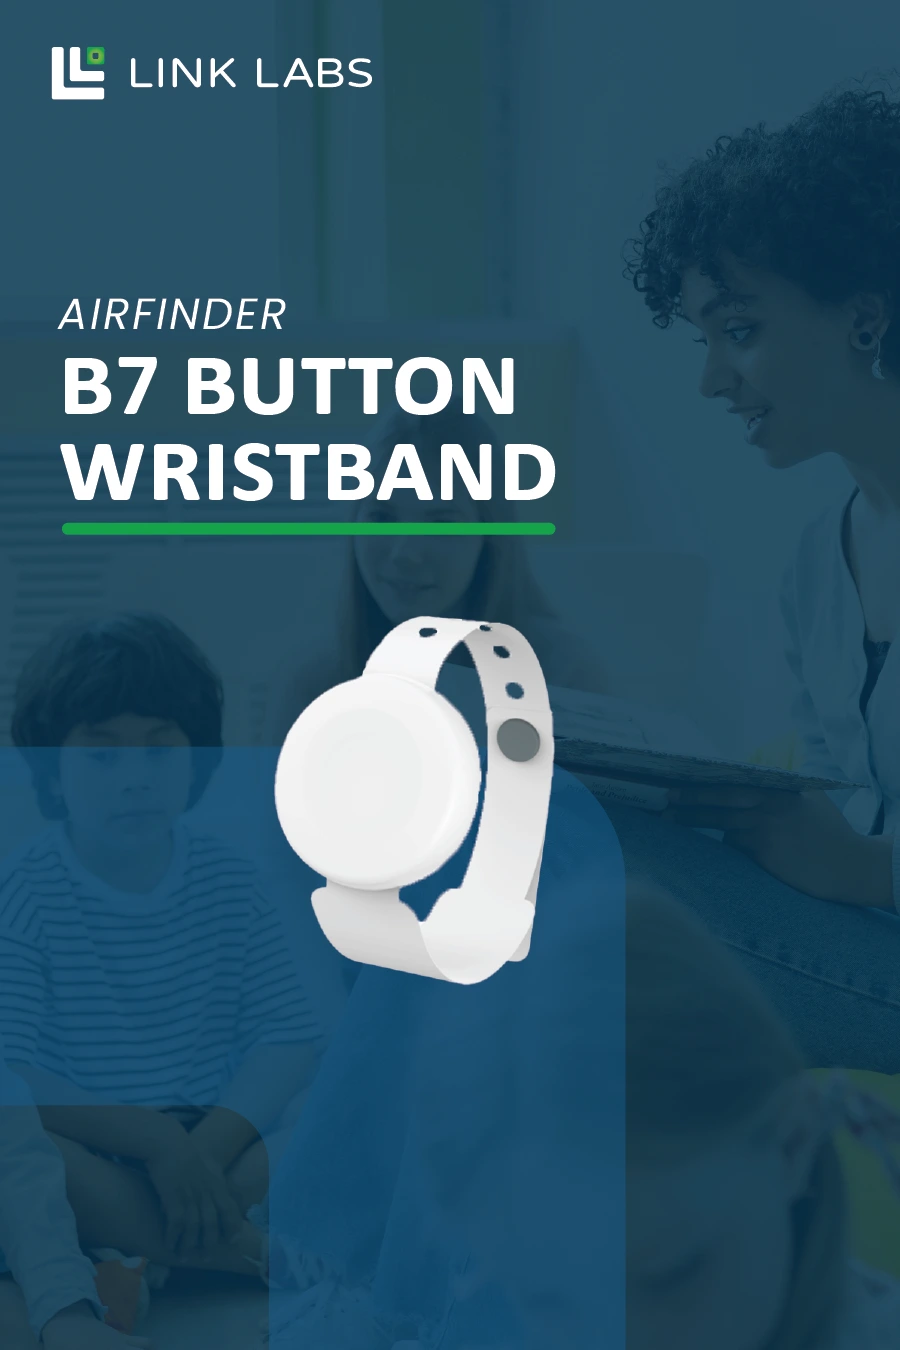 B7 Button Wristband